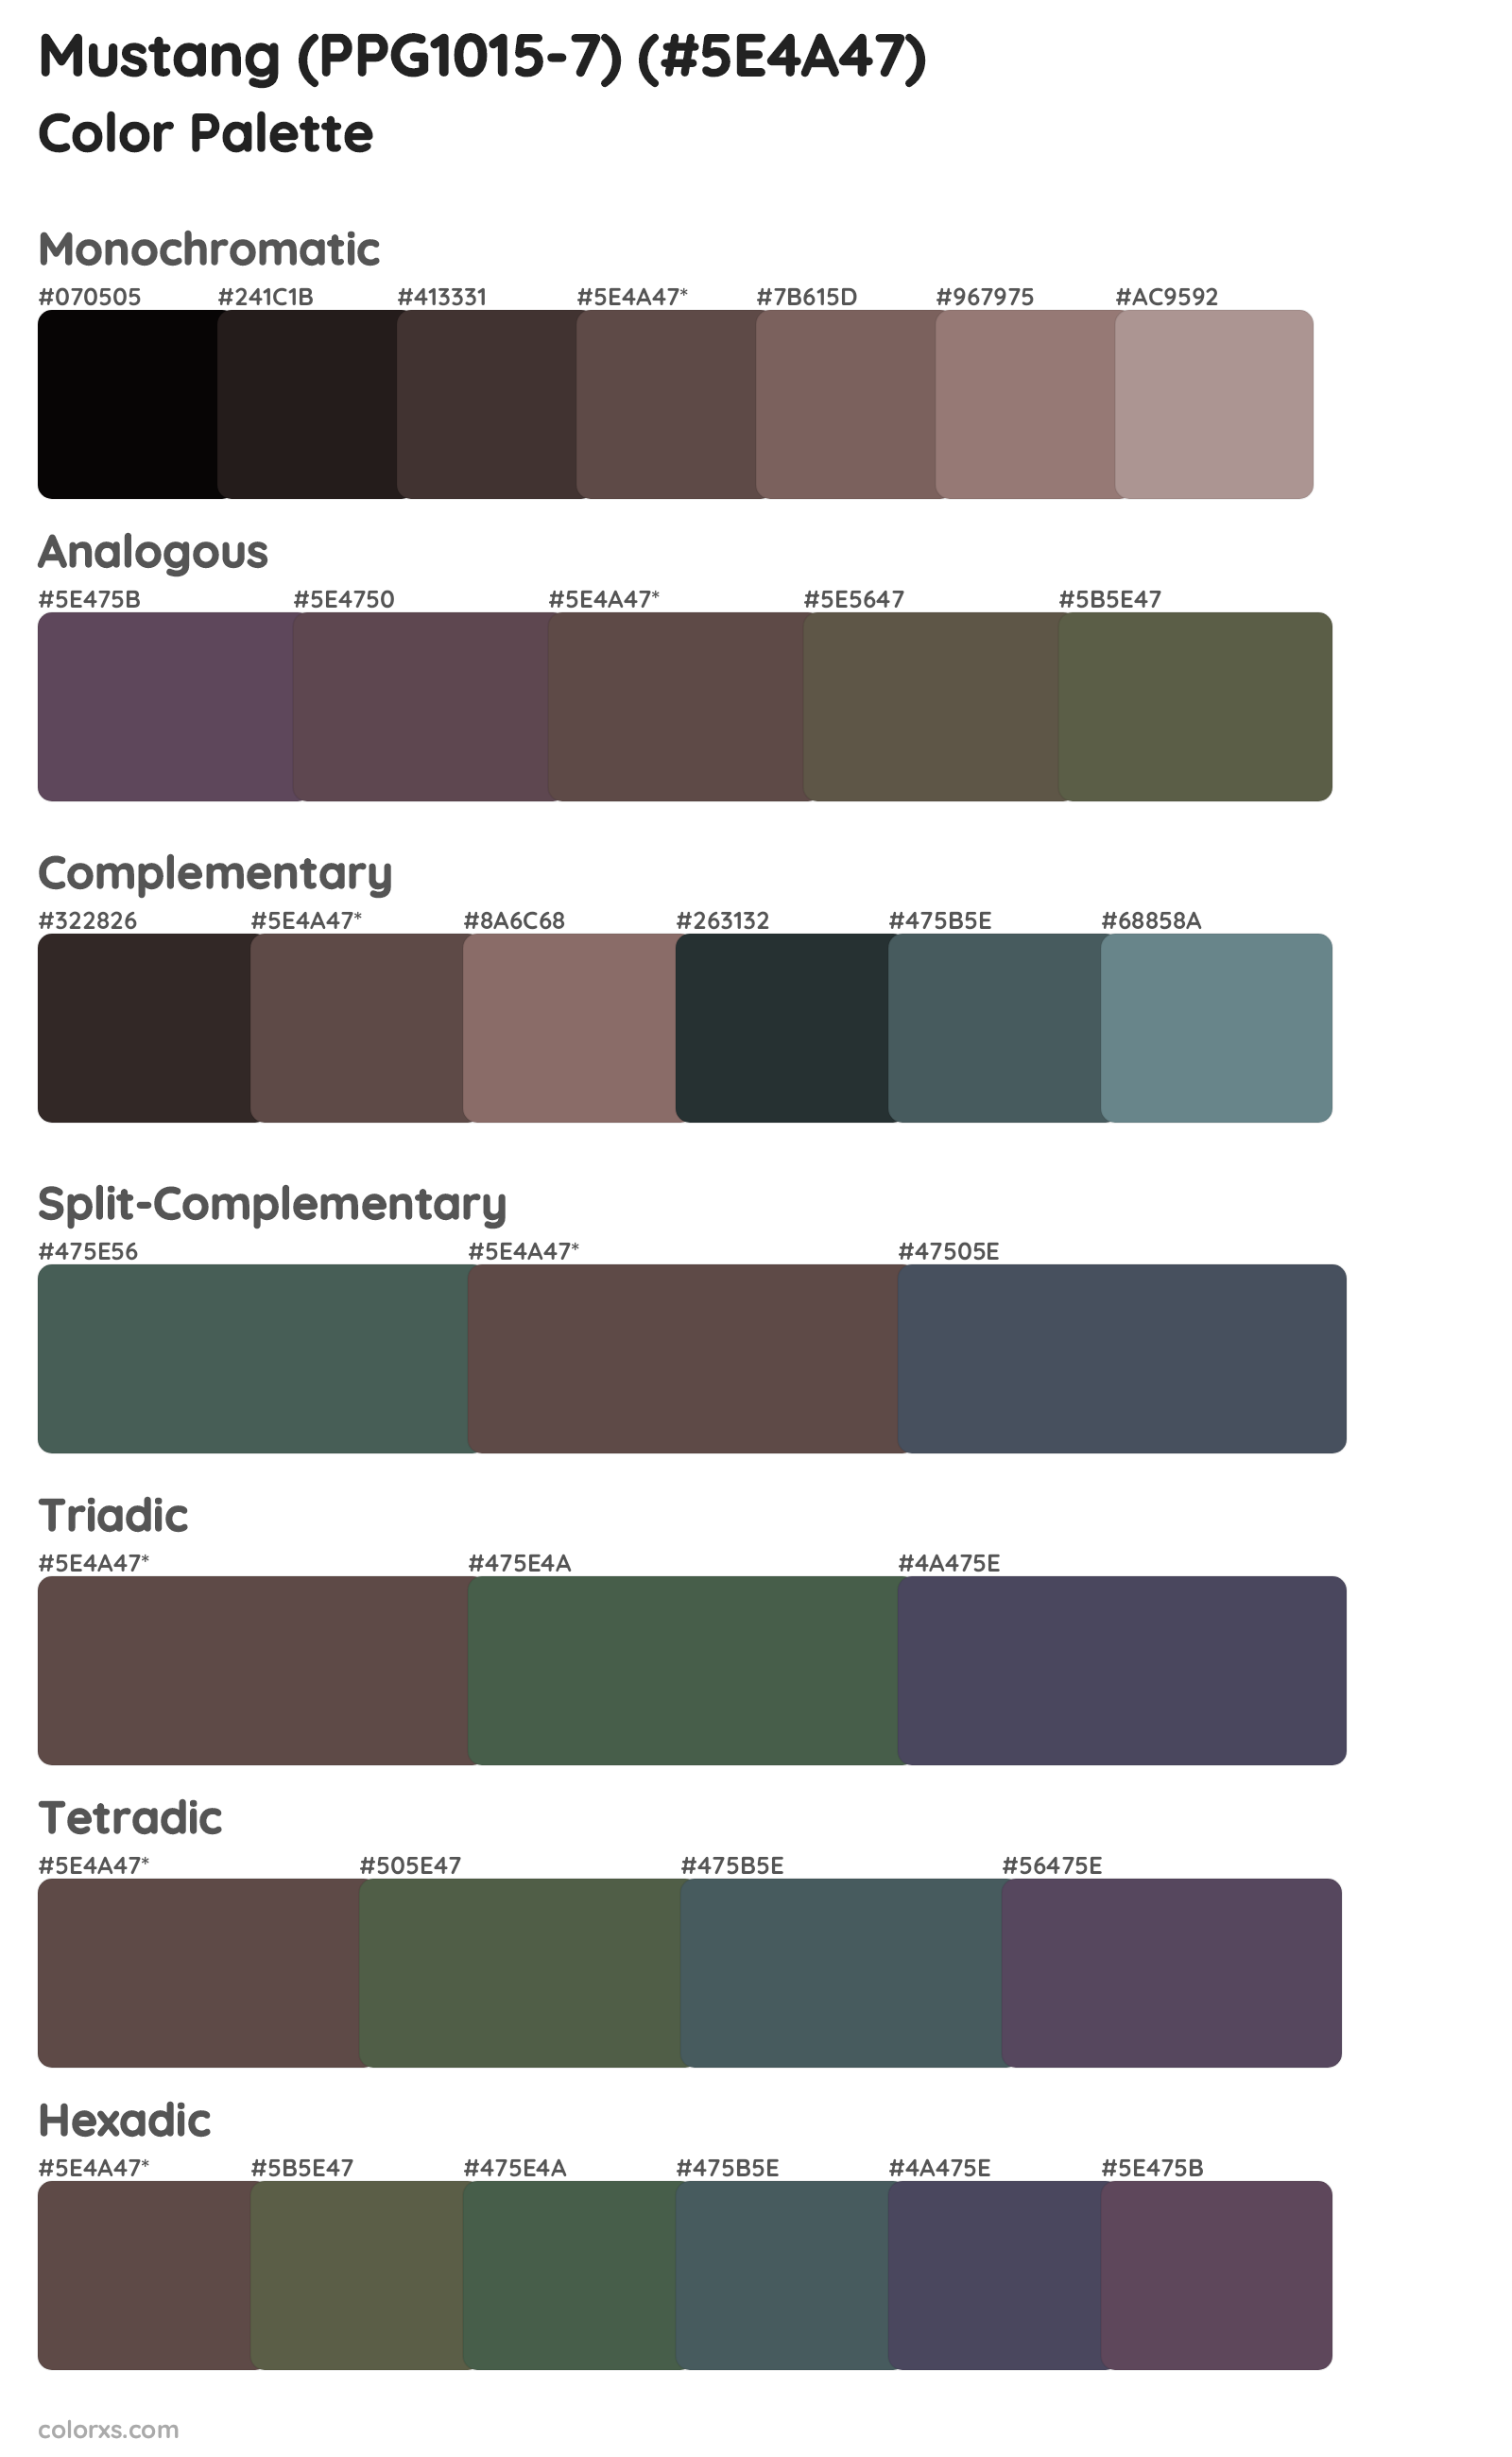 Mustang (PPG1015-7) Color Scheme Palettes